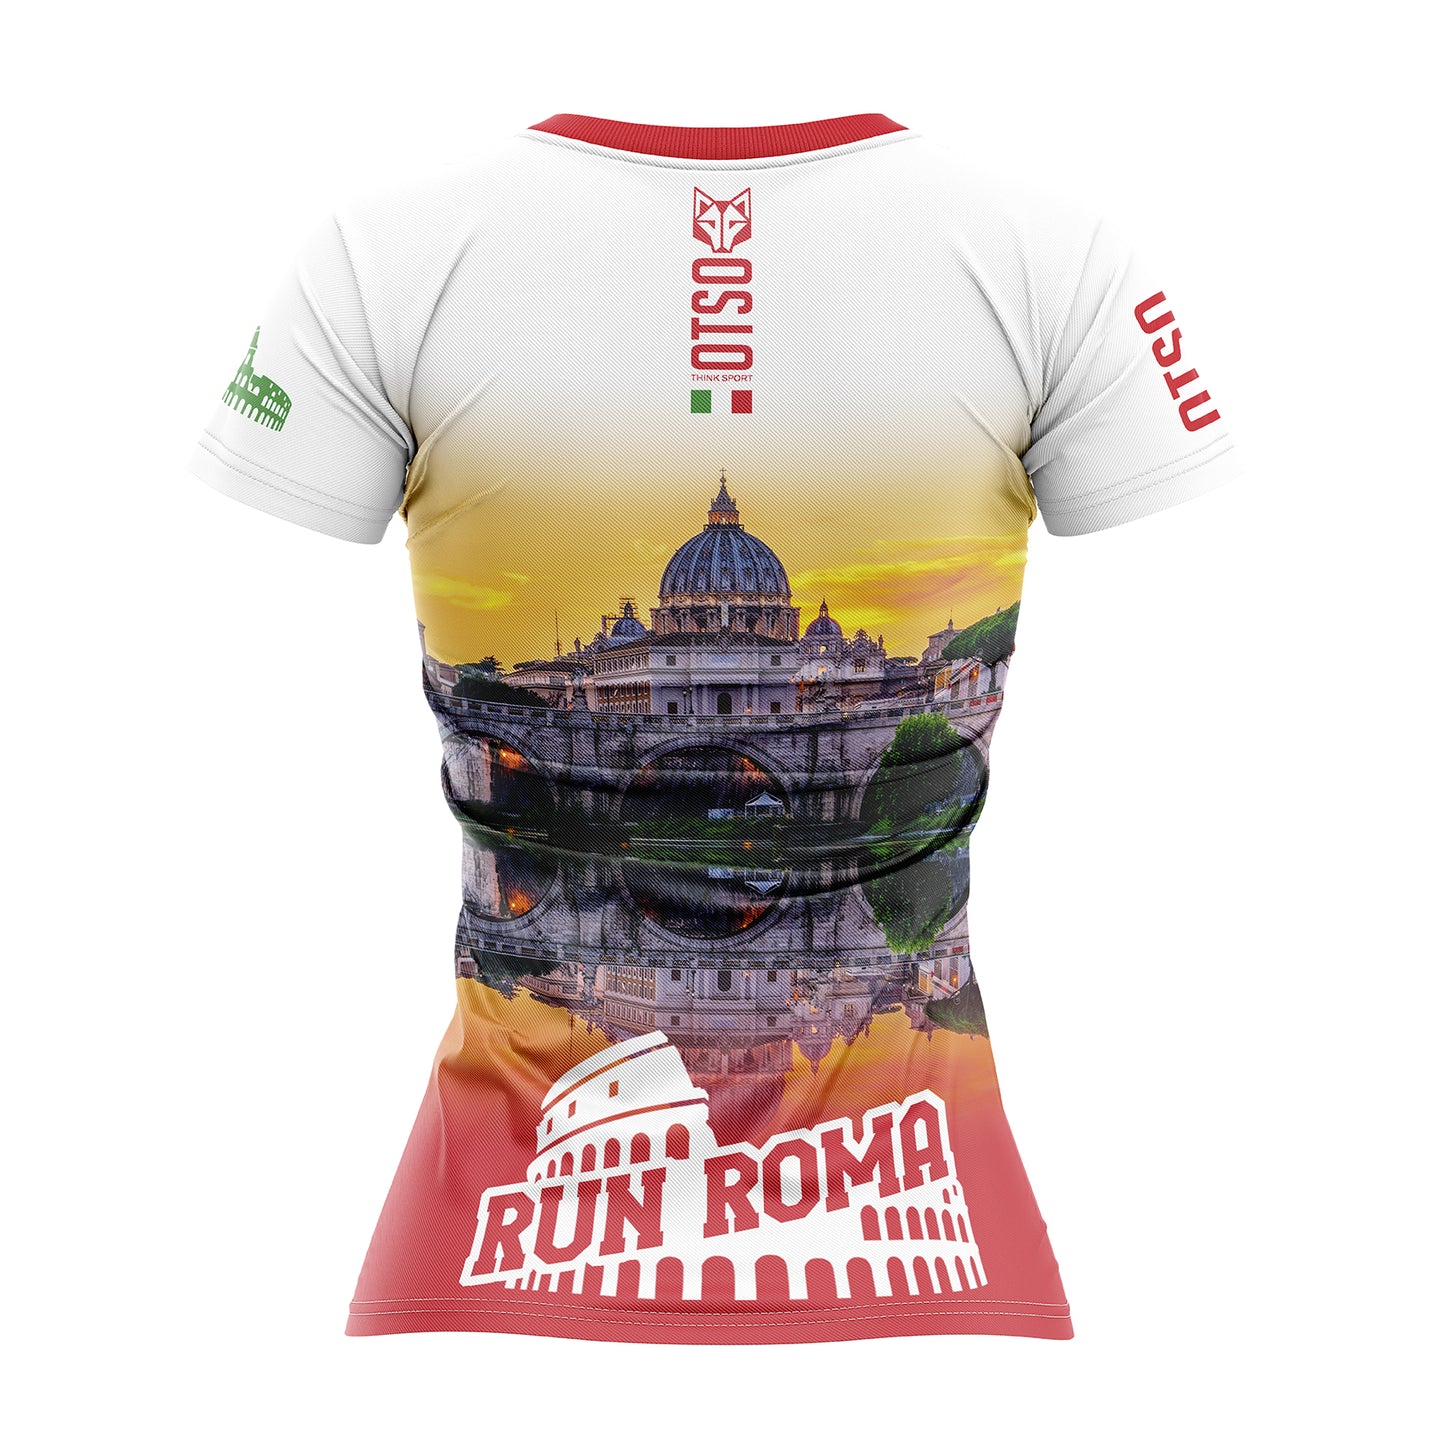 Samarreta màniga curta dona - Run Roma (Outlet)